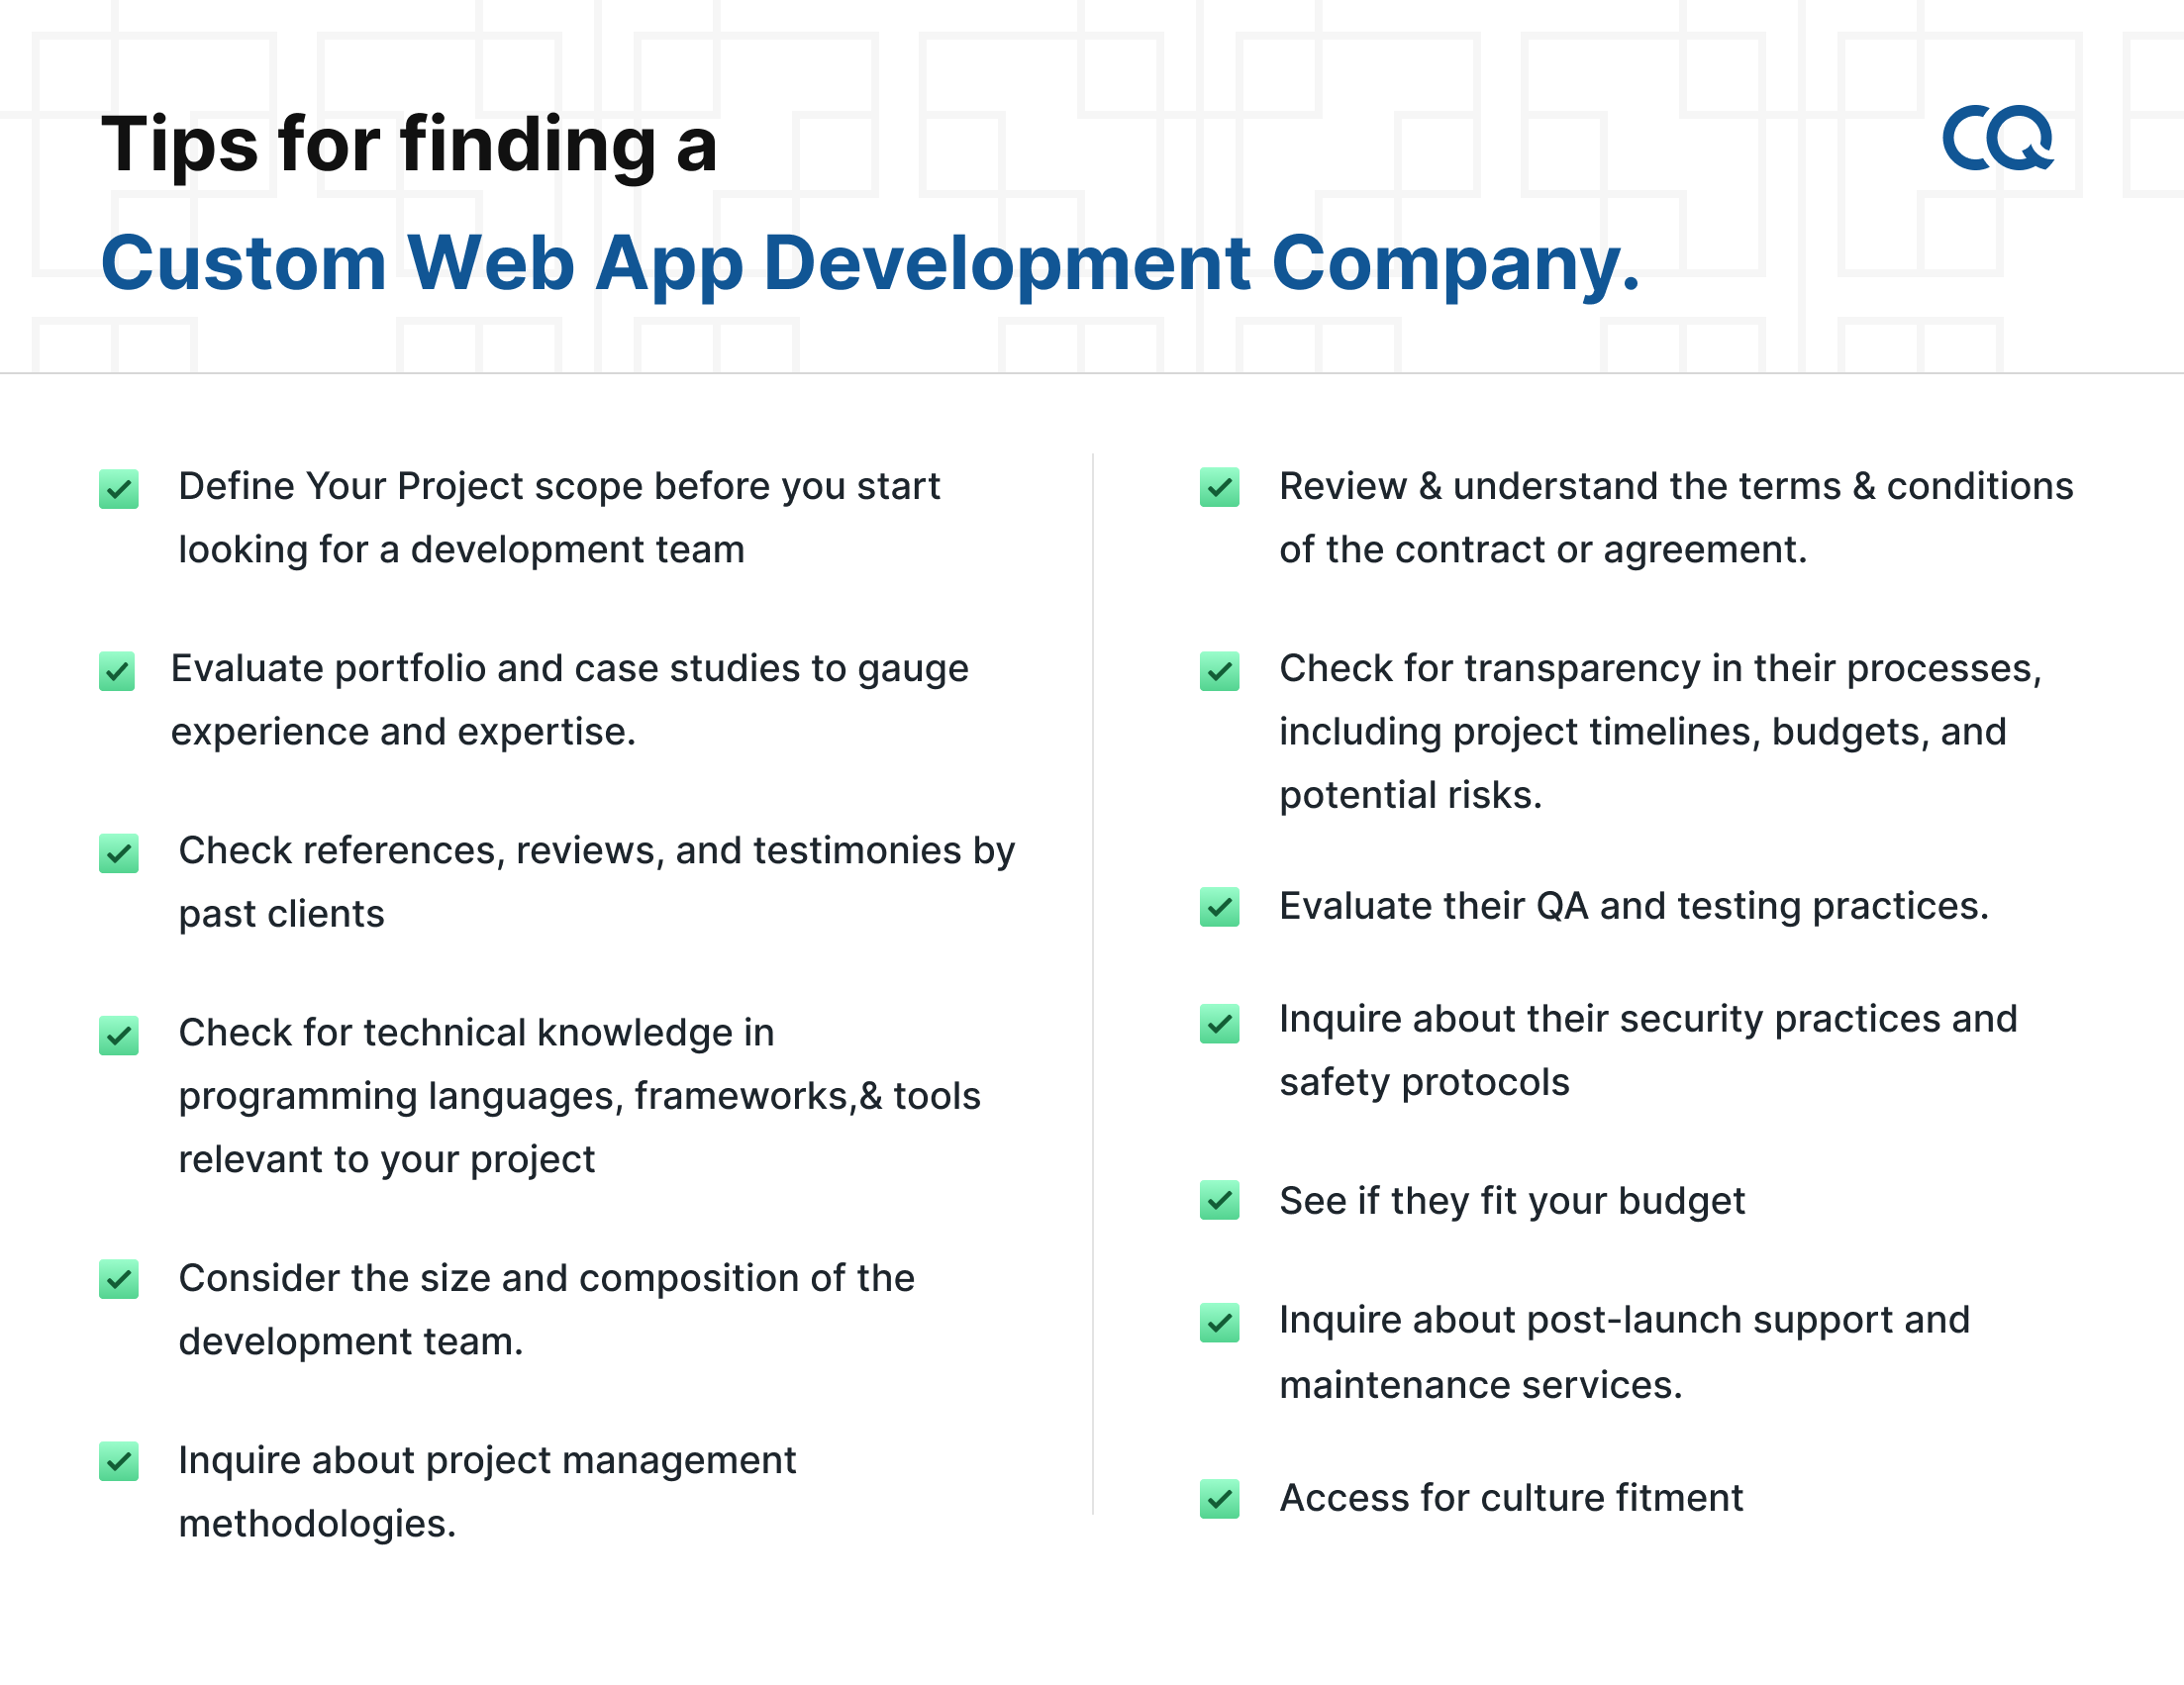 Tips for finding custom web app development company